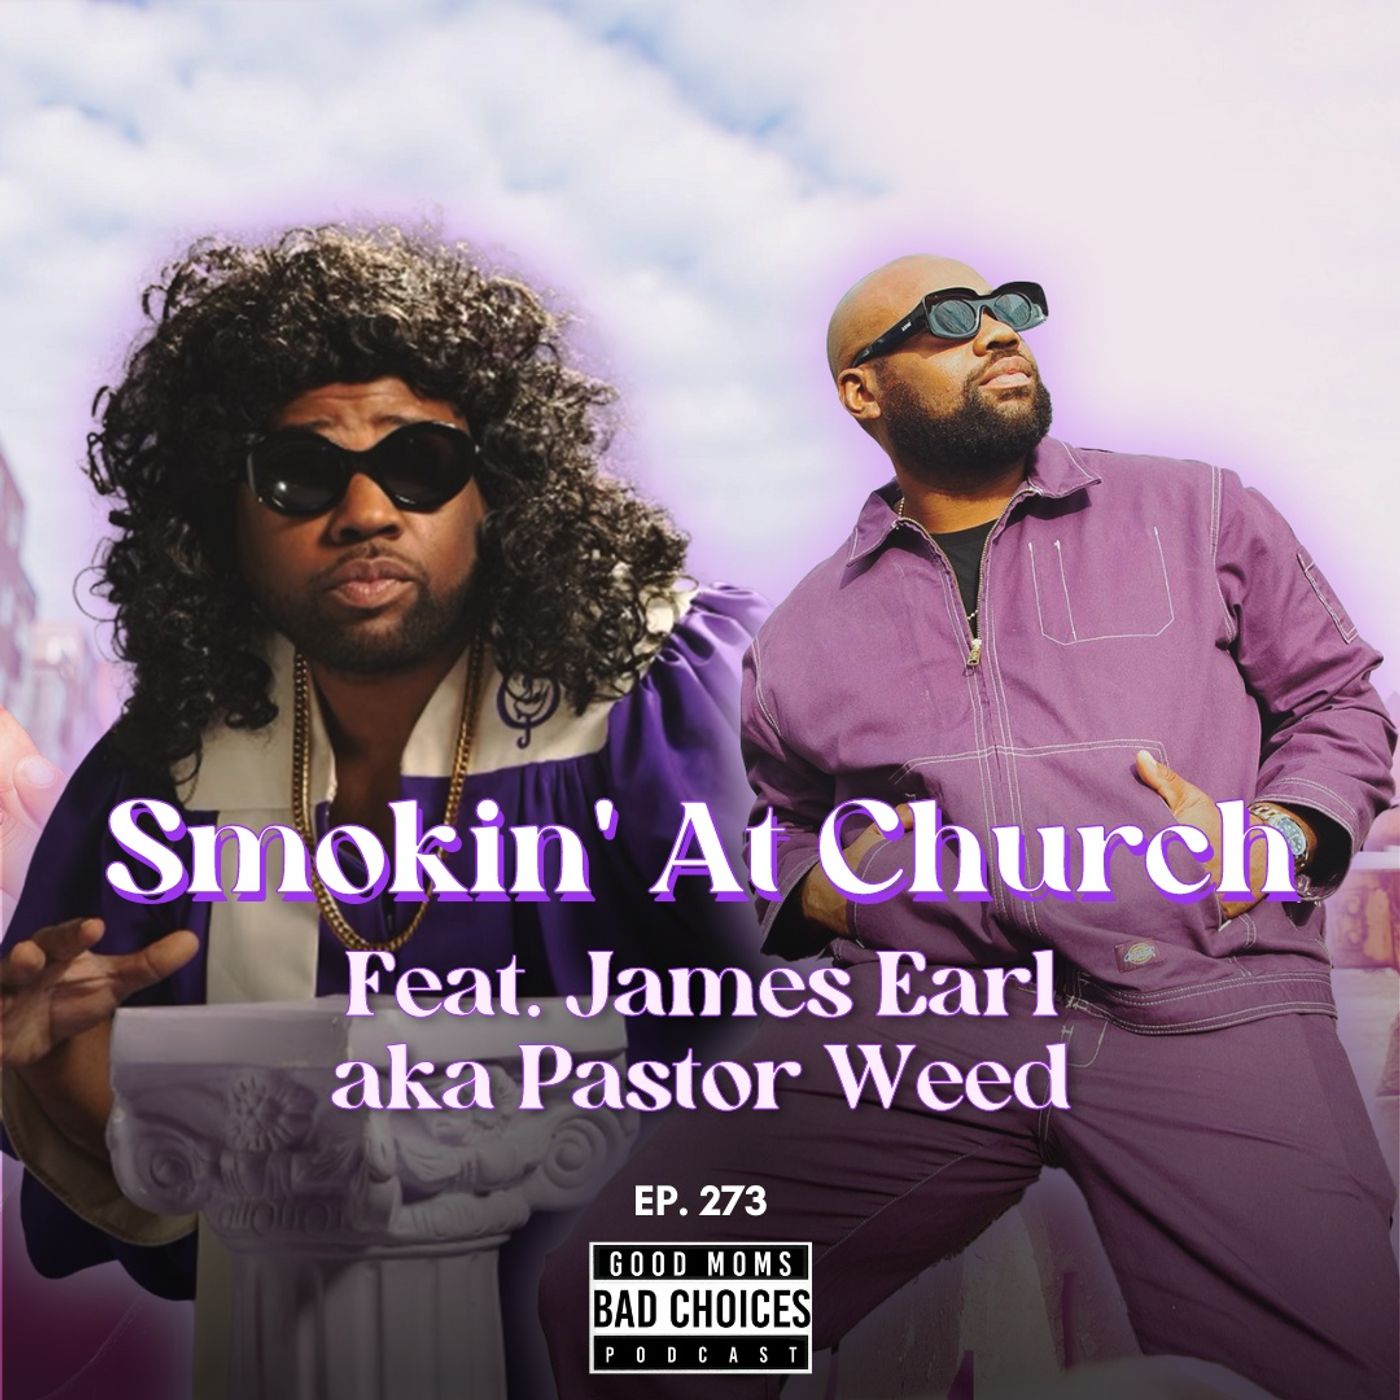 Smokin’ At Church feat. James Earl aka Pastor Weed